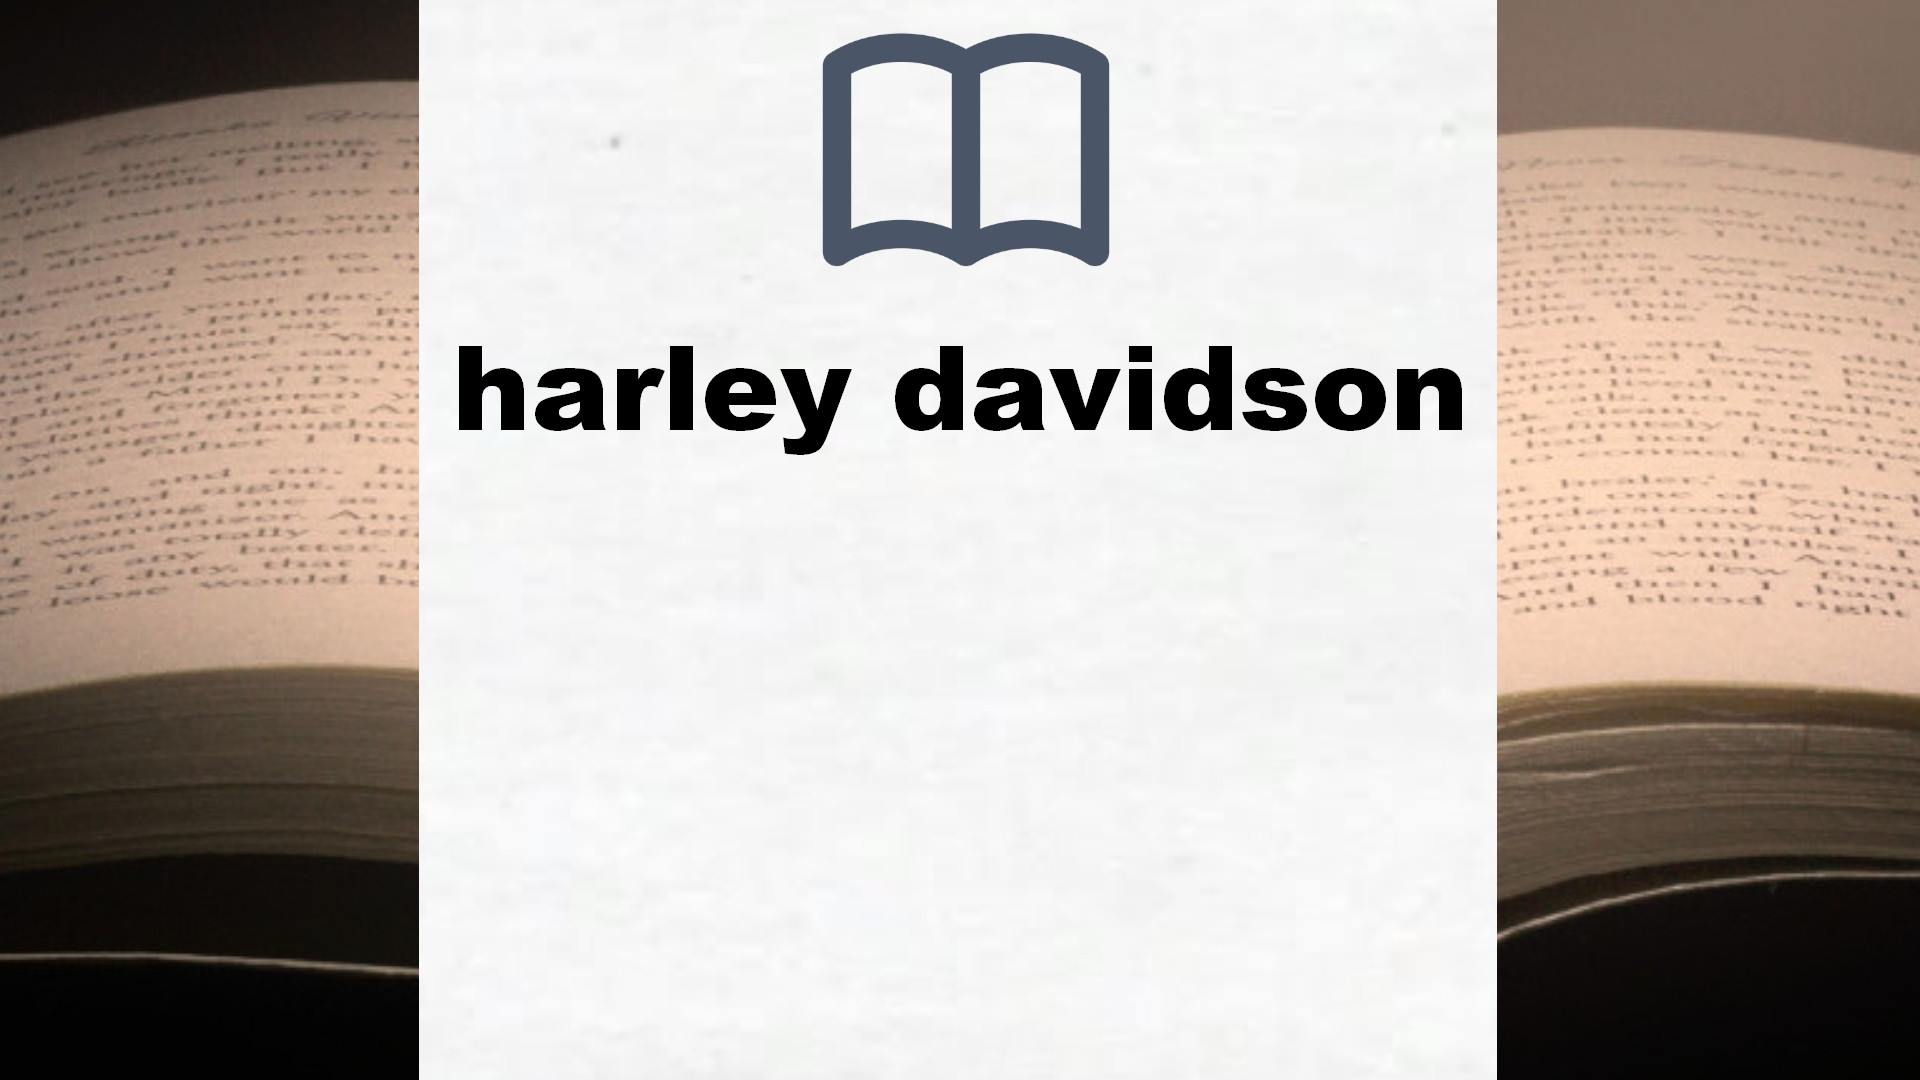 Libros sobre harley davidson